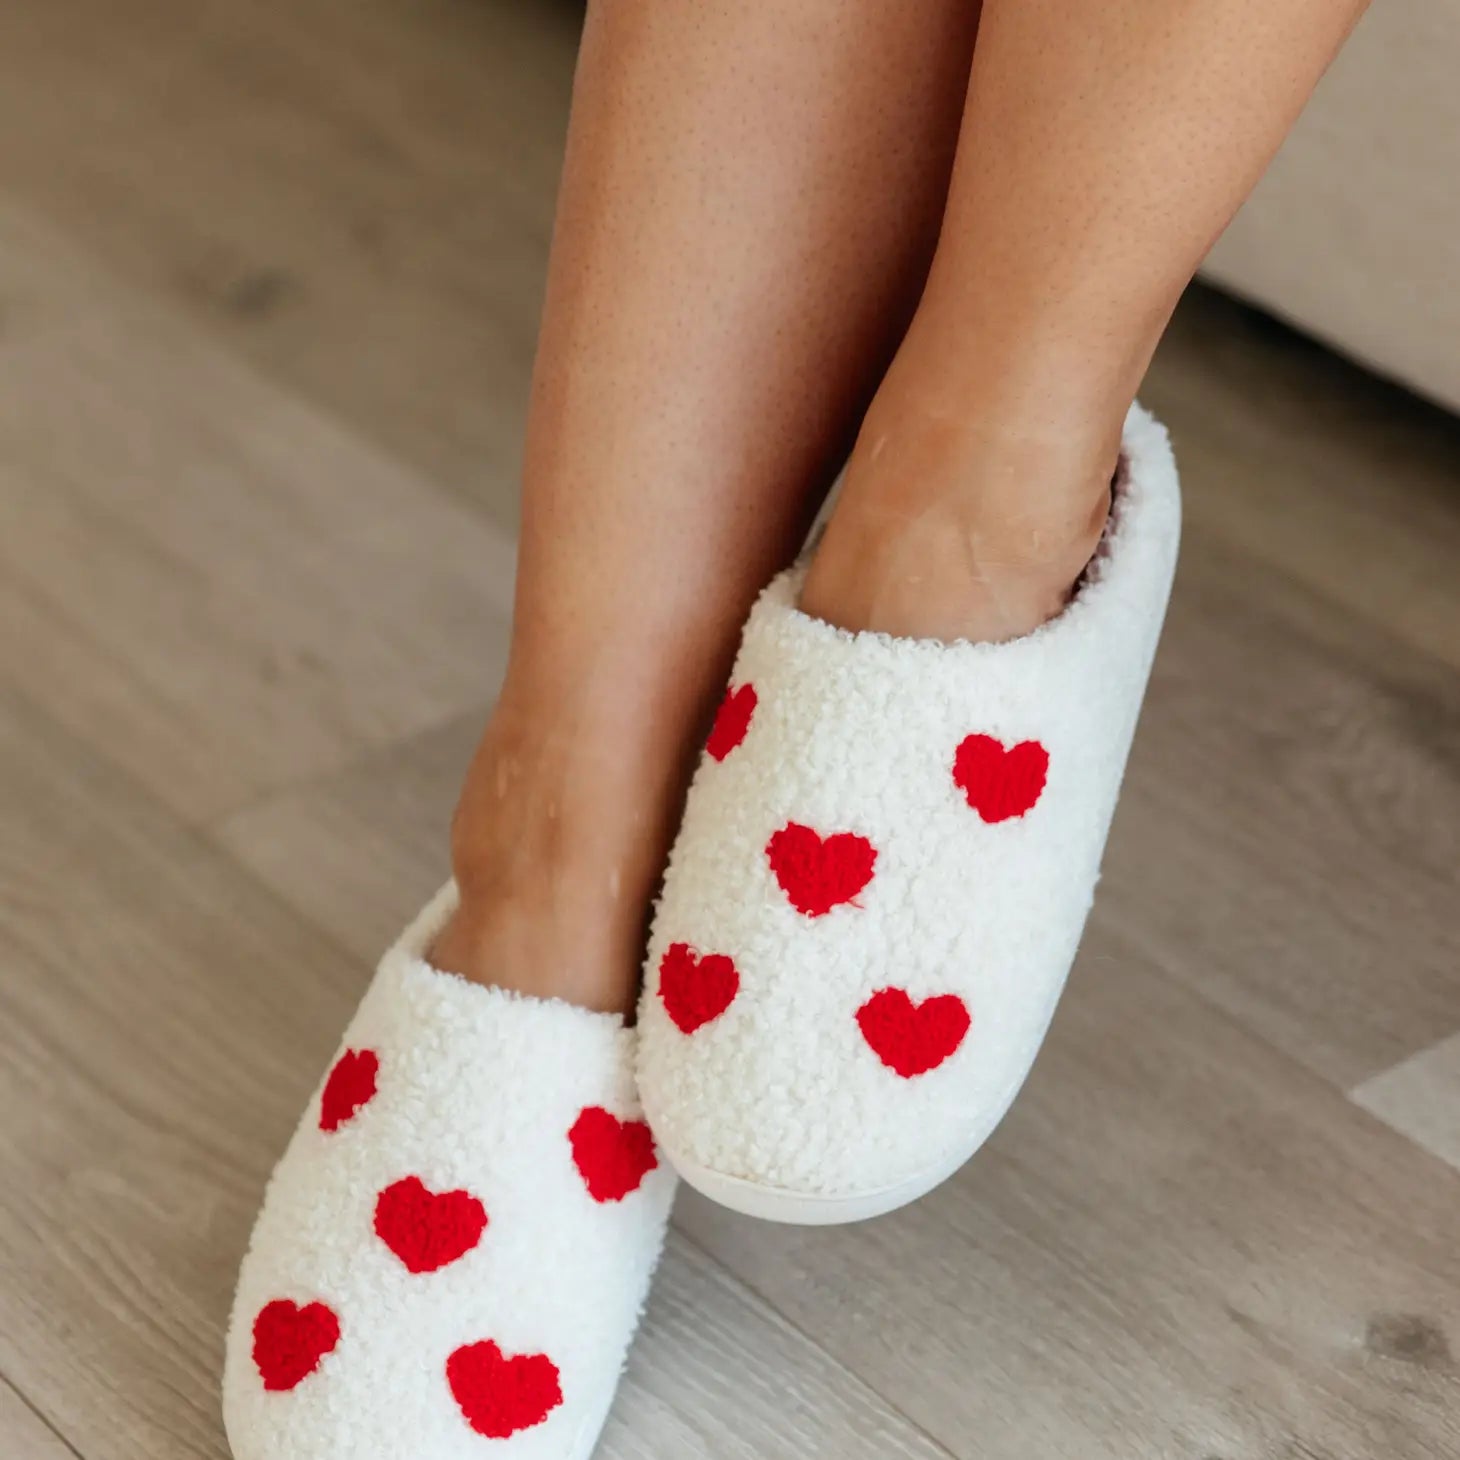 Heart Cozy Slippers